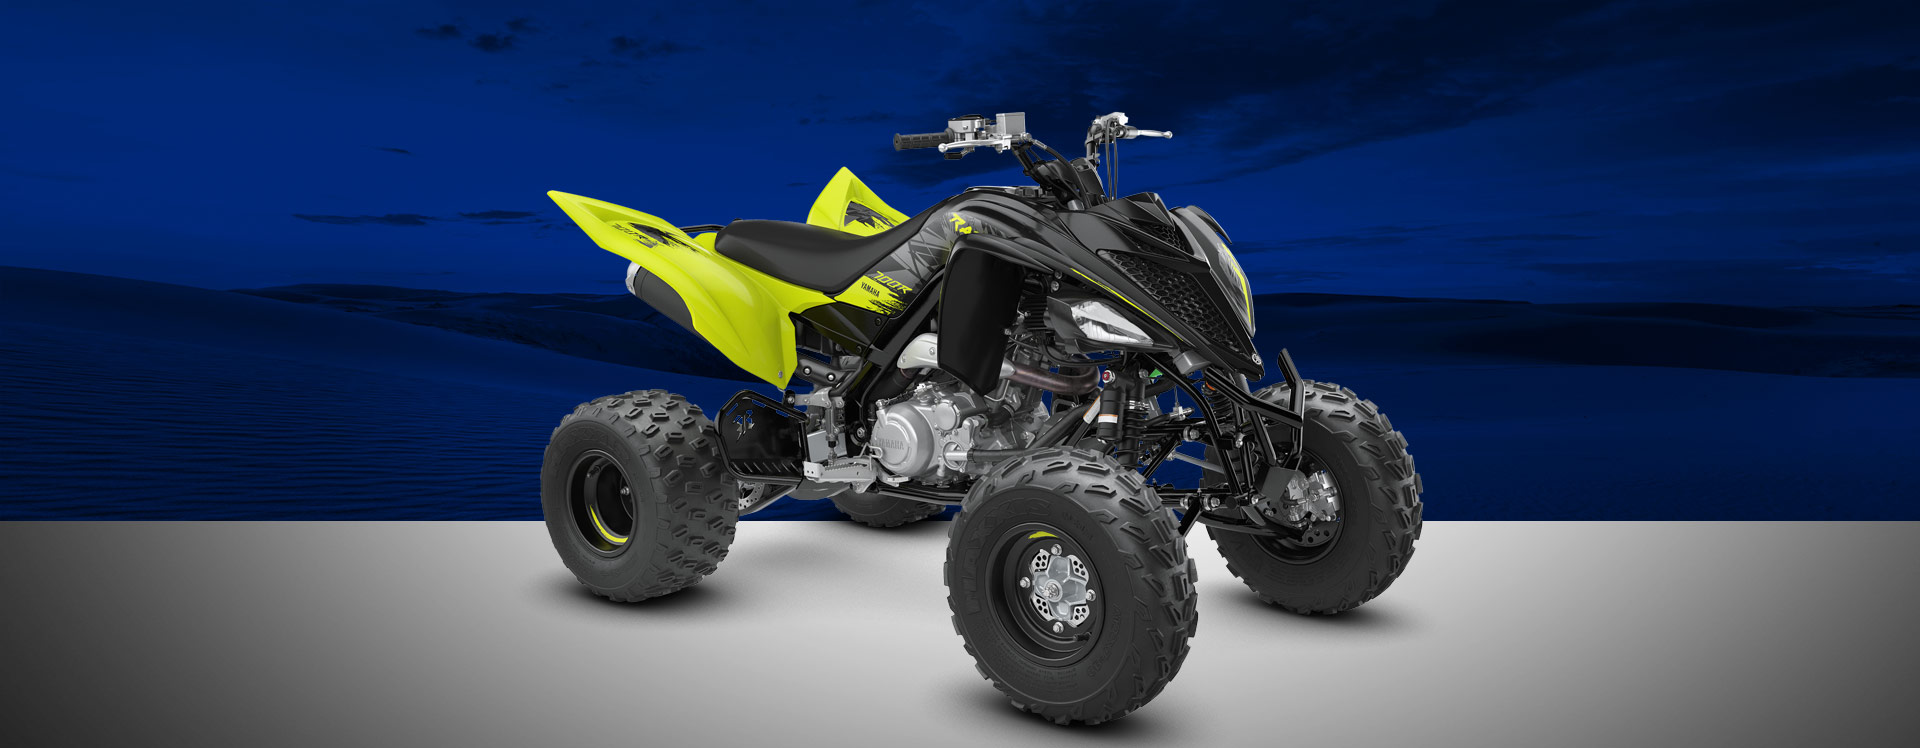 2013 Yamaha Sport ATV Utility ATV Side by Side Brochure 